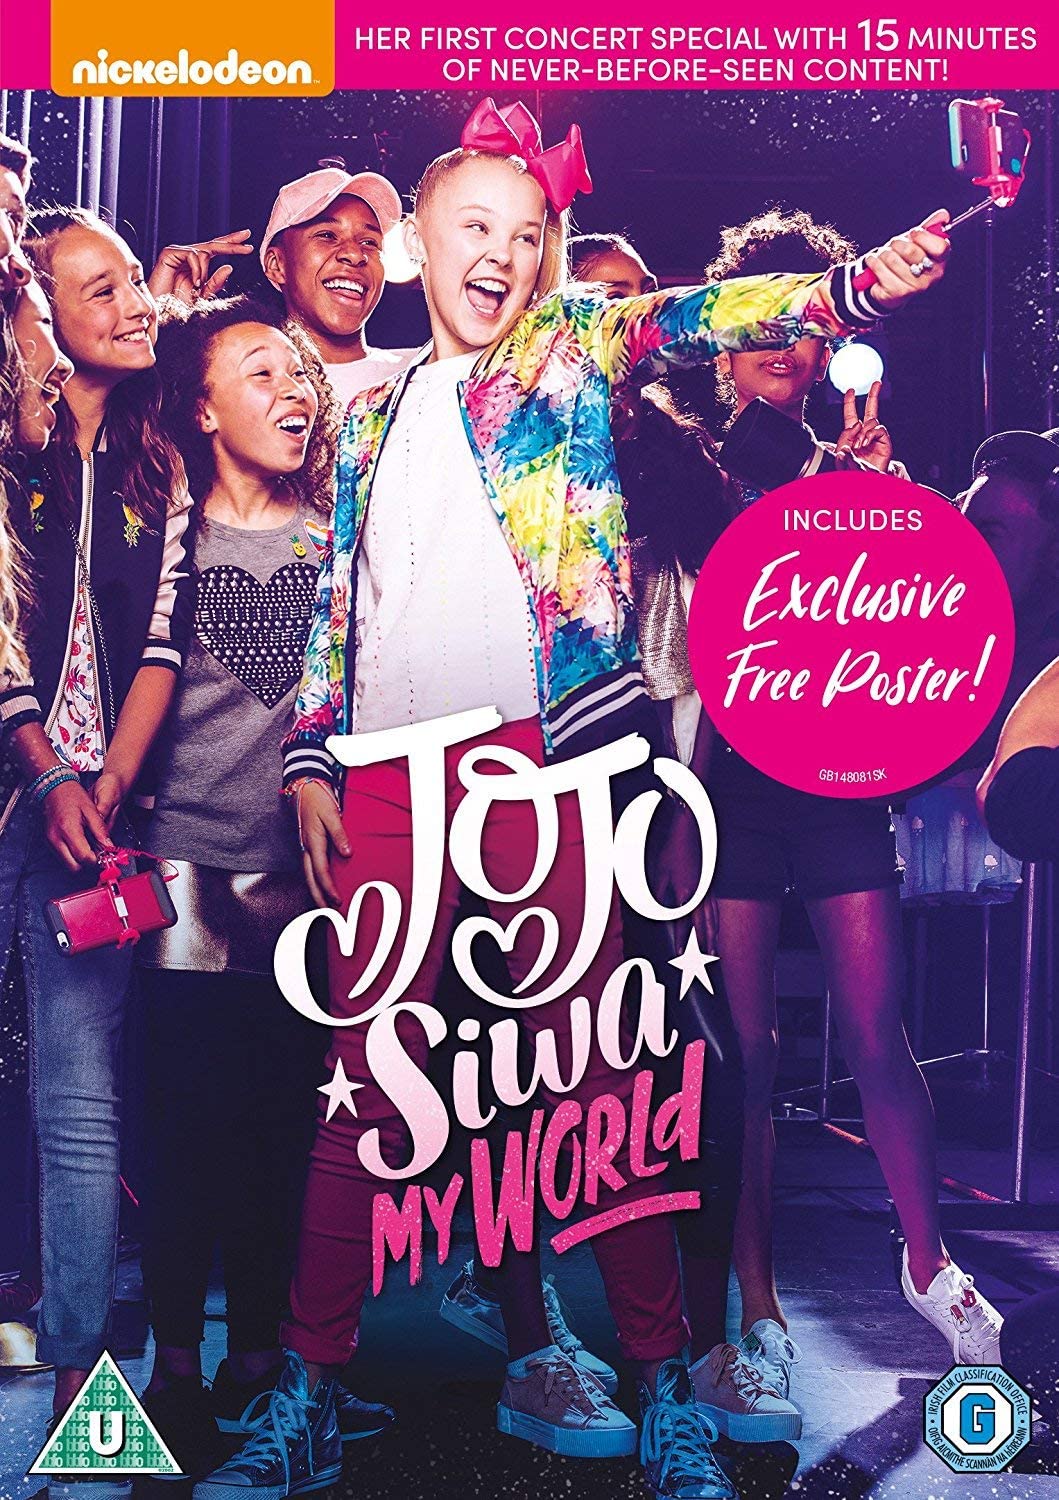 Jojo Siwa: My World (exclusieve poster inbegrepen) [DVD]